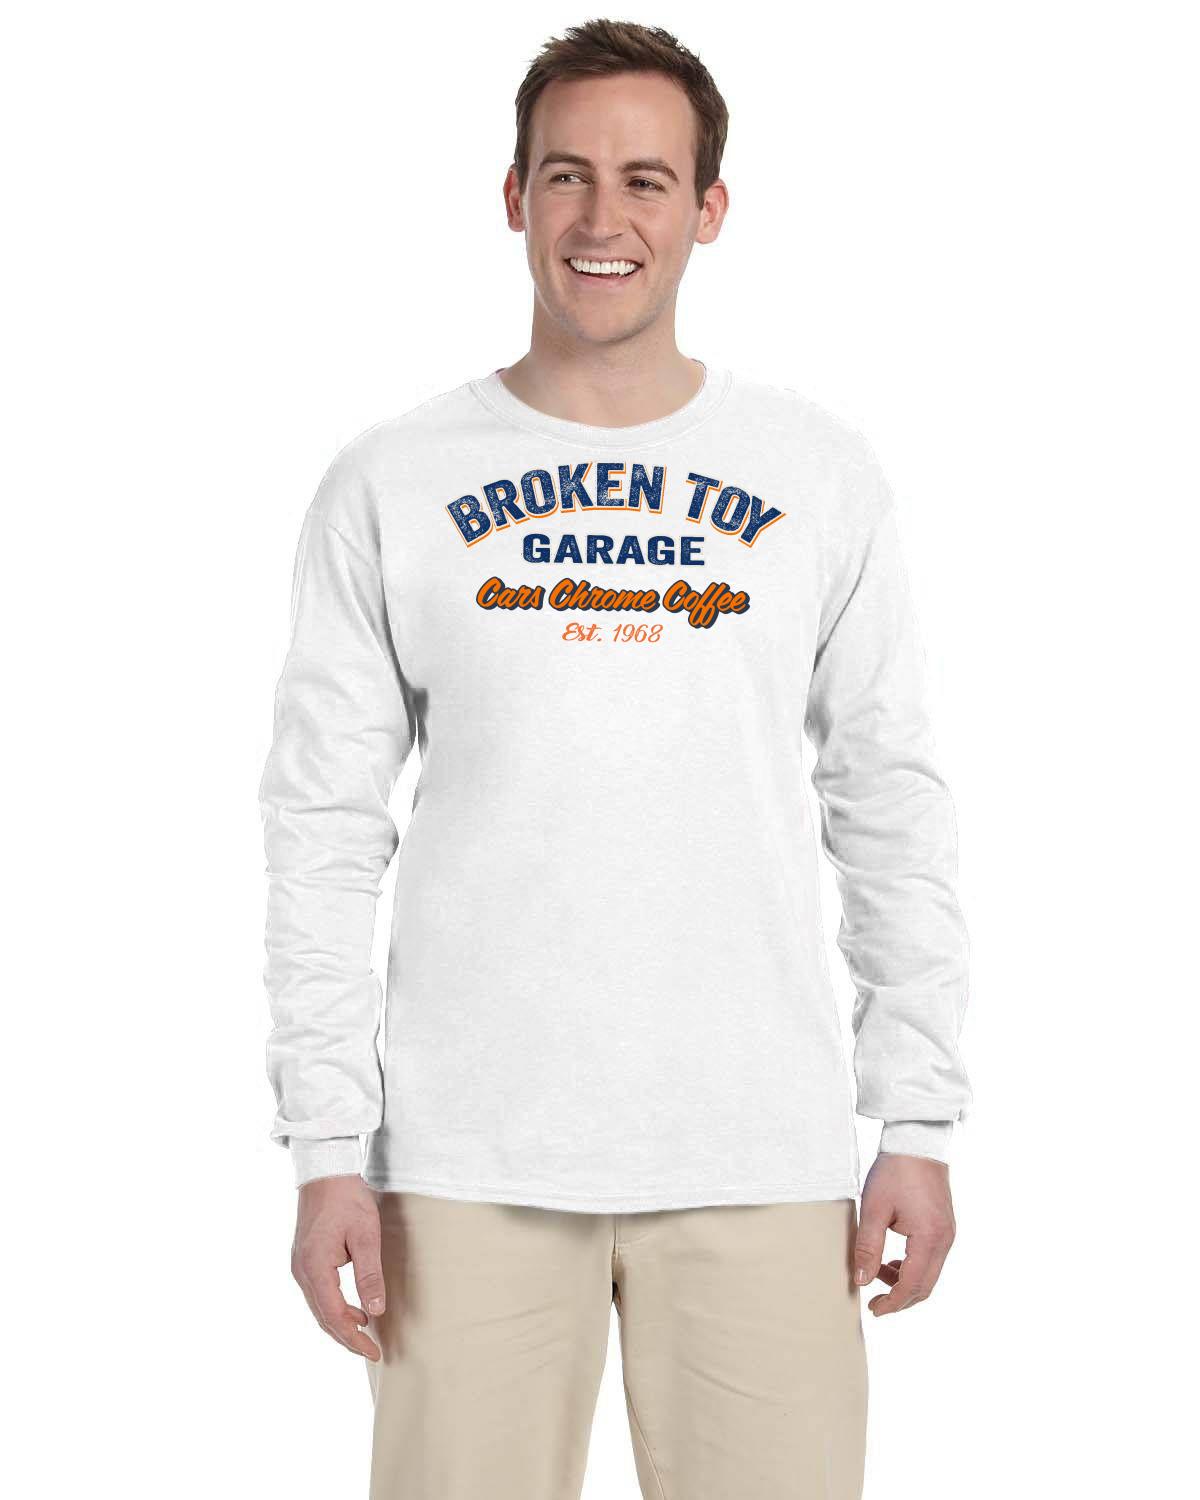 Broken Toy Garage Adult Long-Sleeve T-Shirt